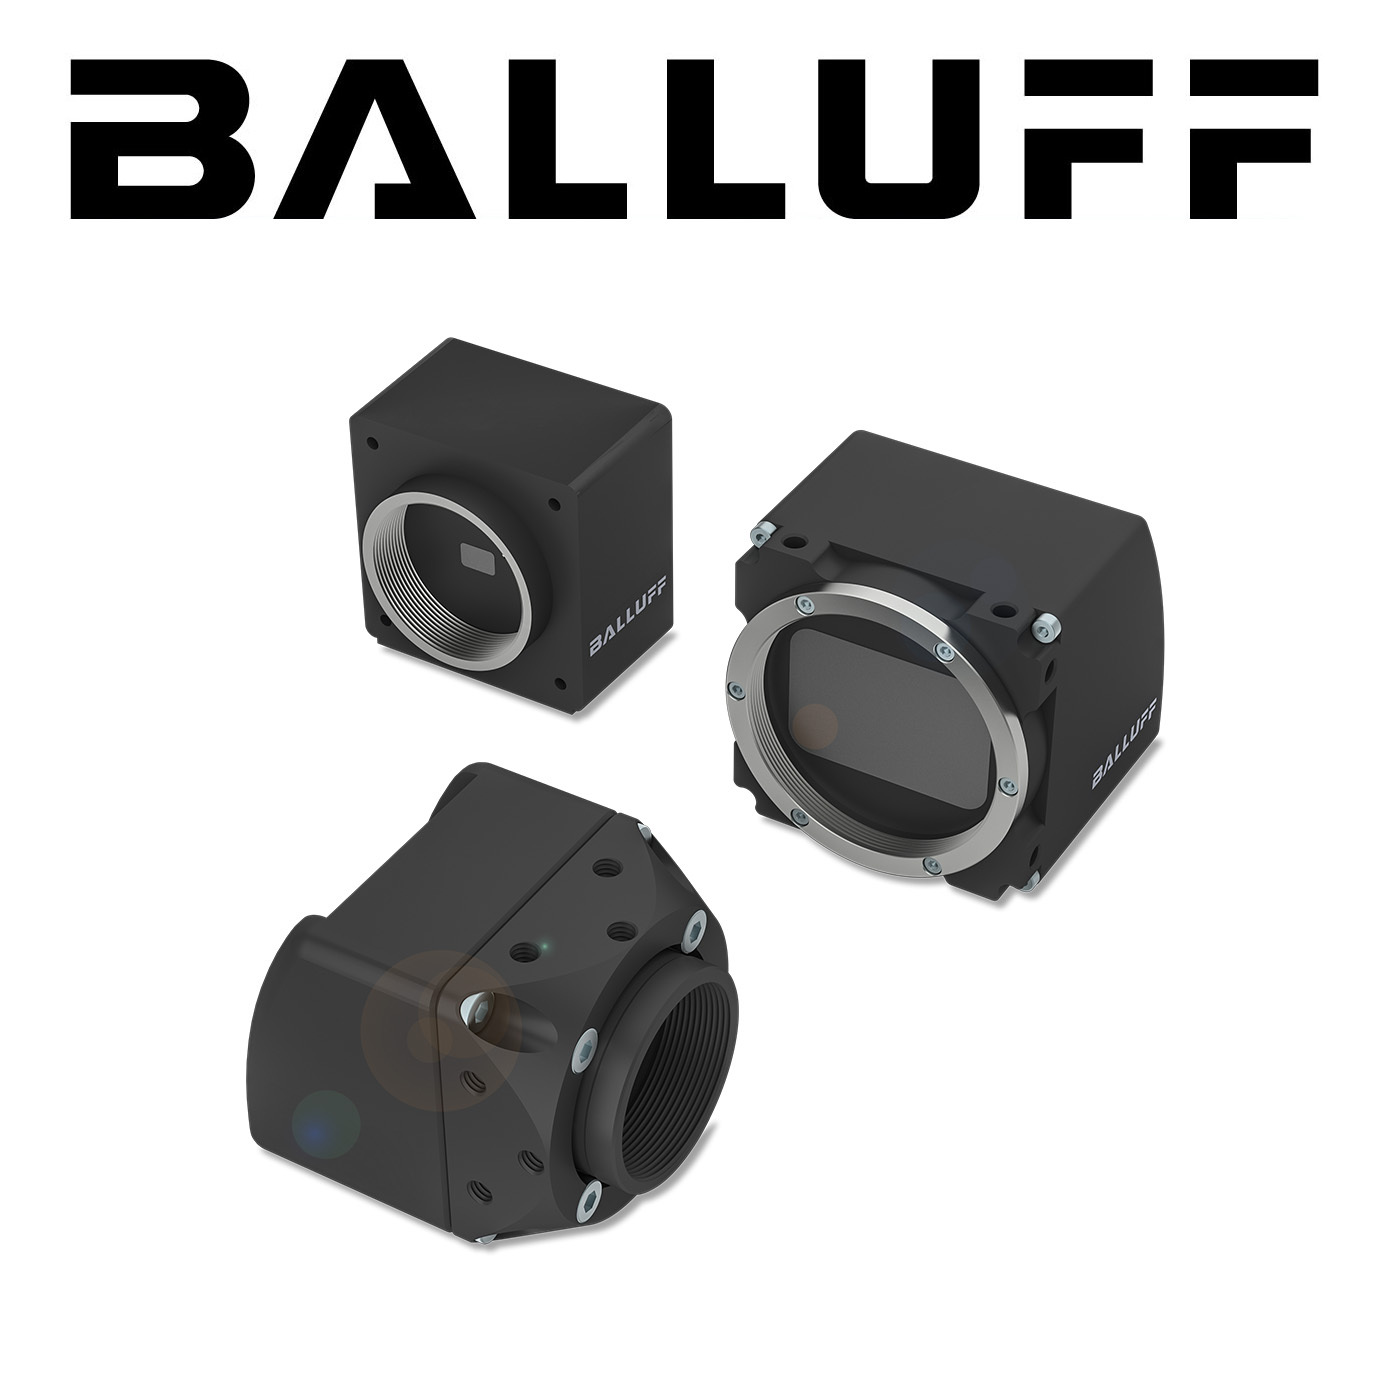 Matrix Vision is now Balluff - Introducing BalluffMV